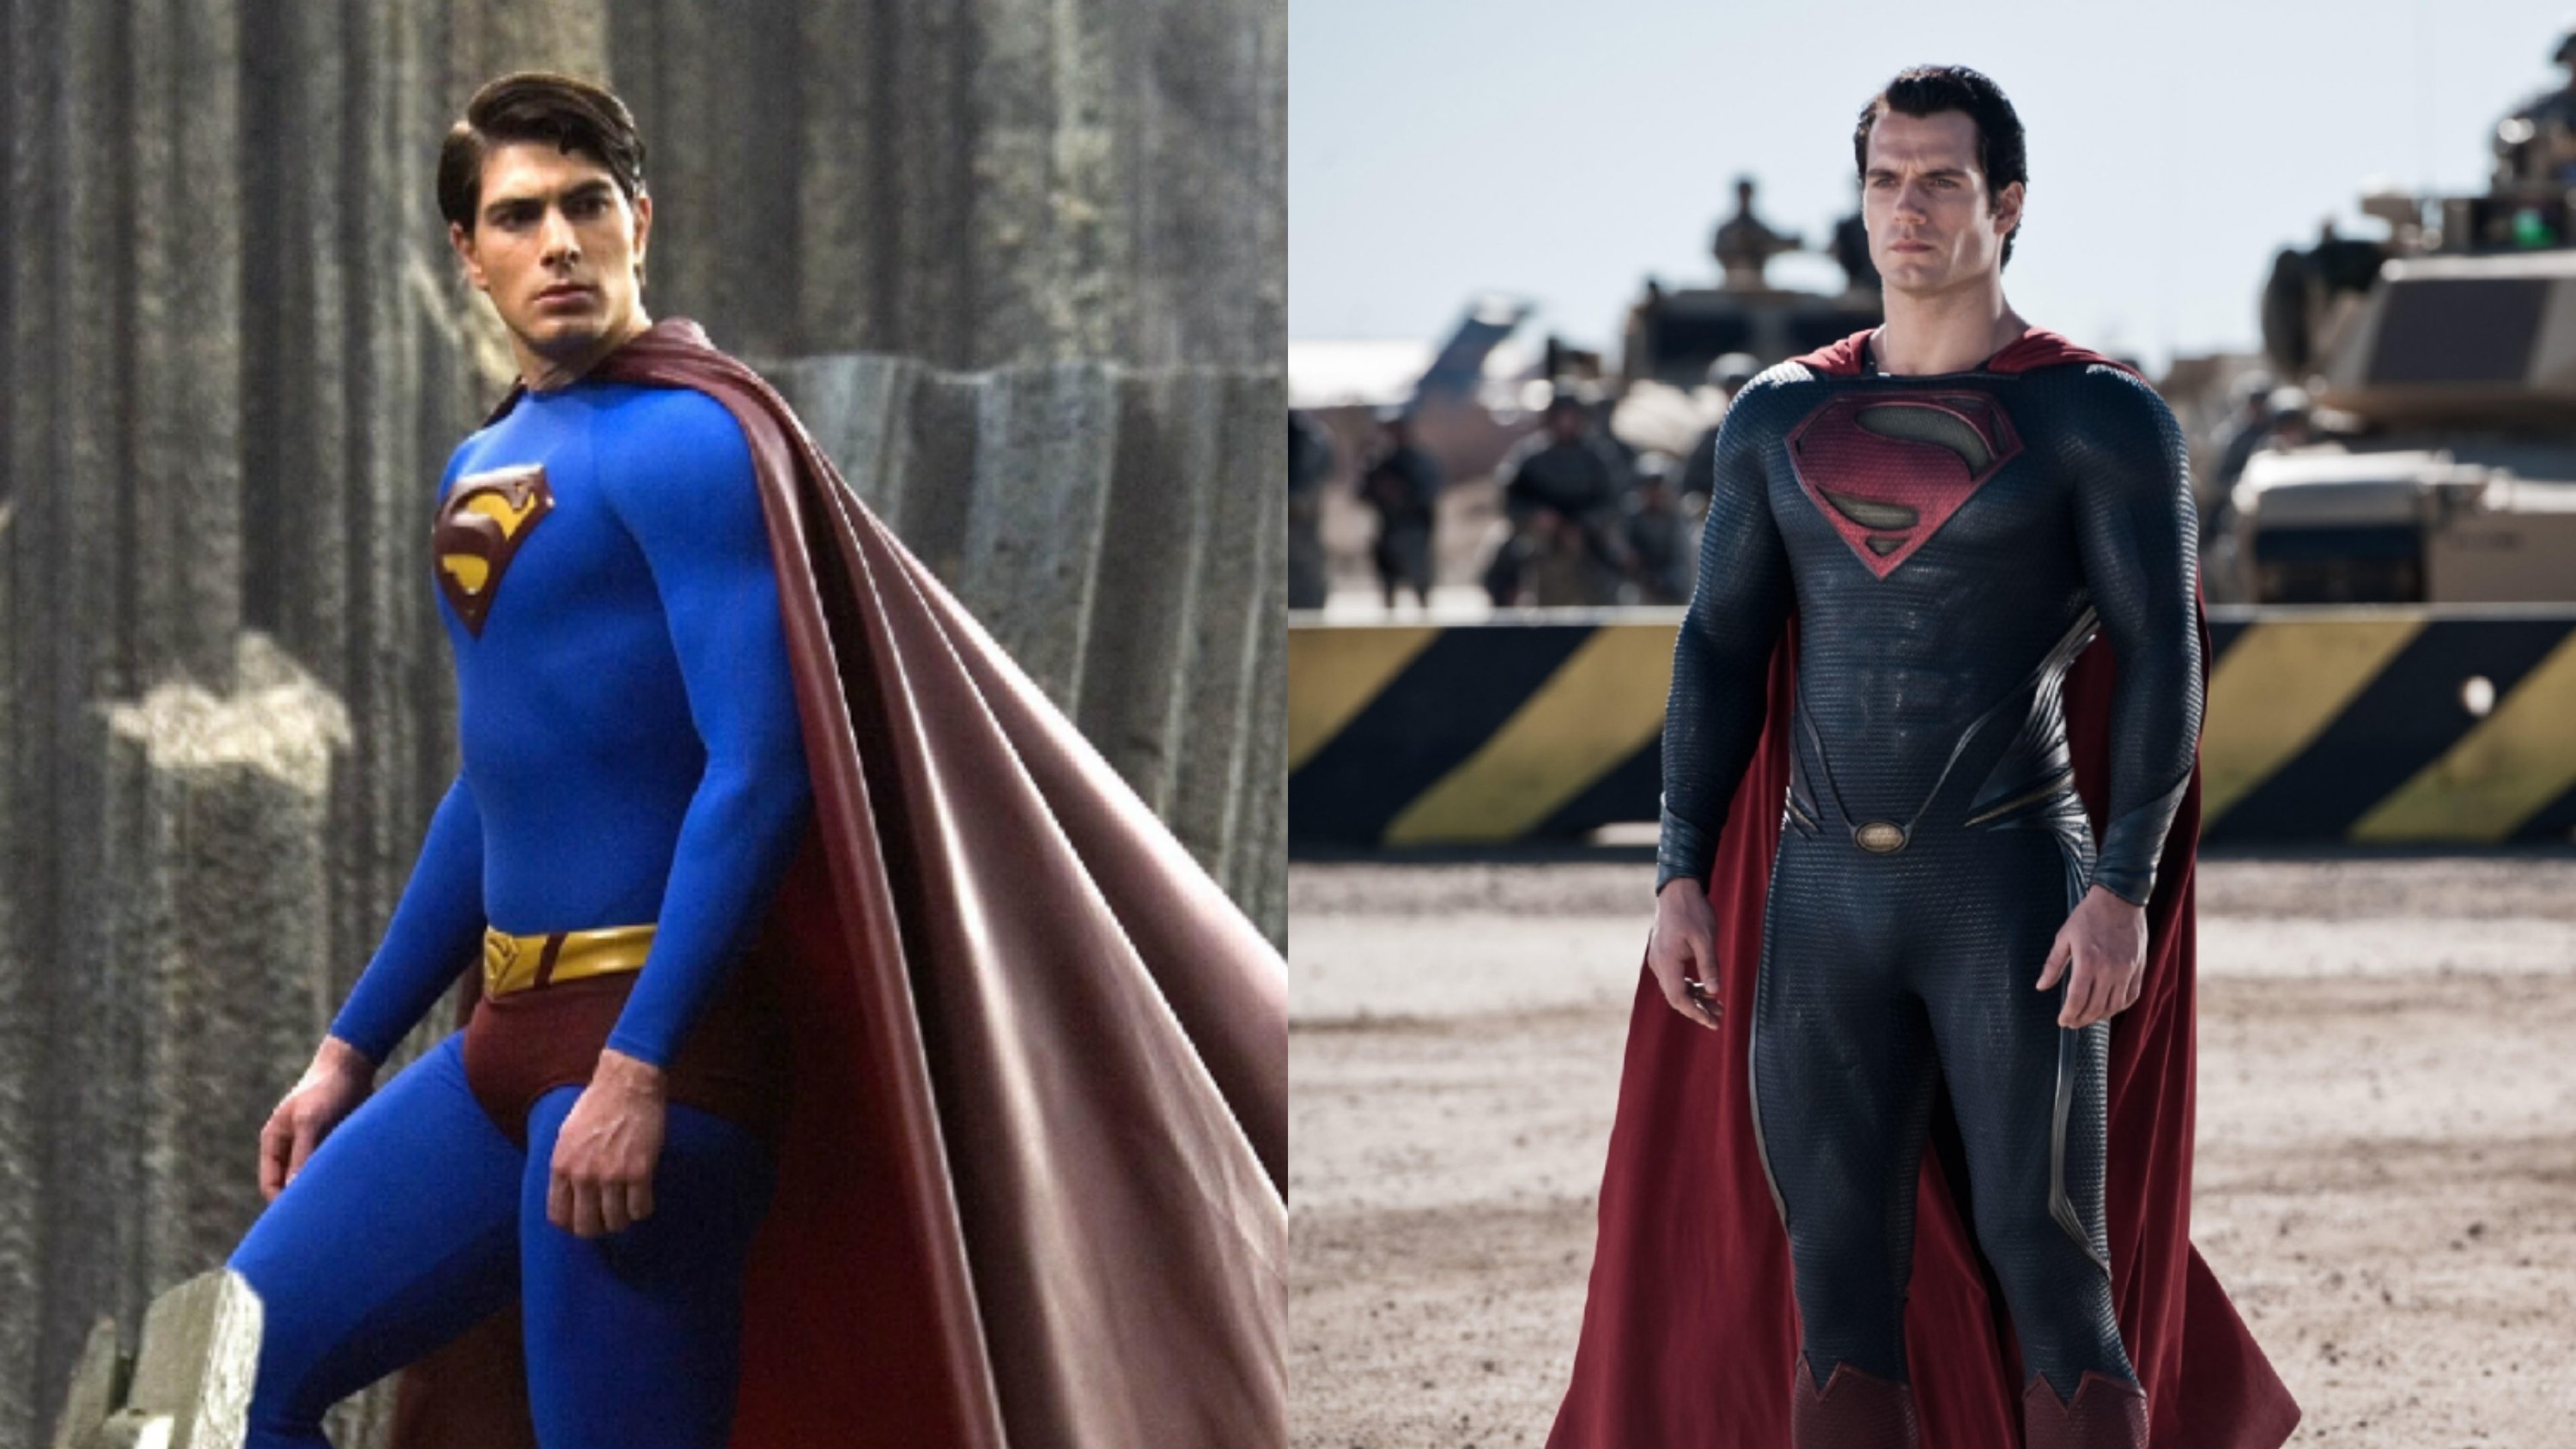 Brandon Routh as Superman vs. Henry Cavill as Superman